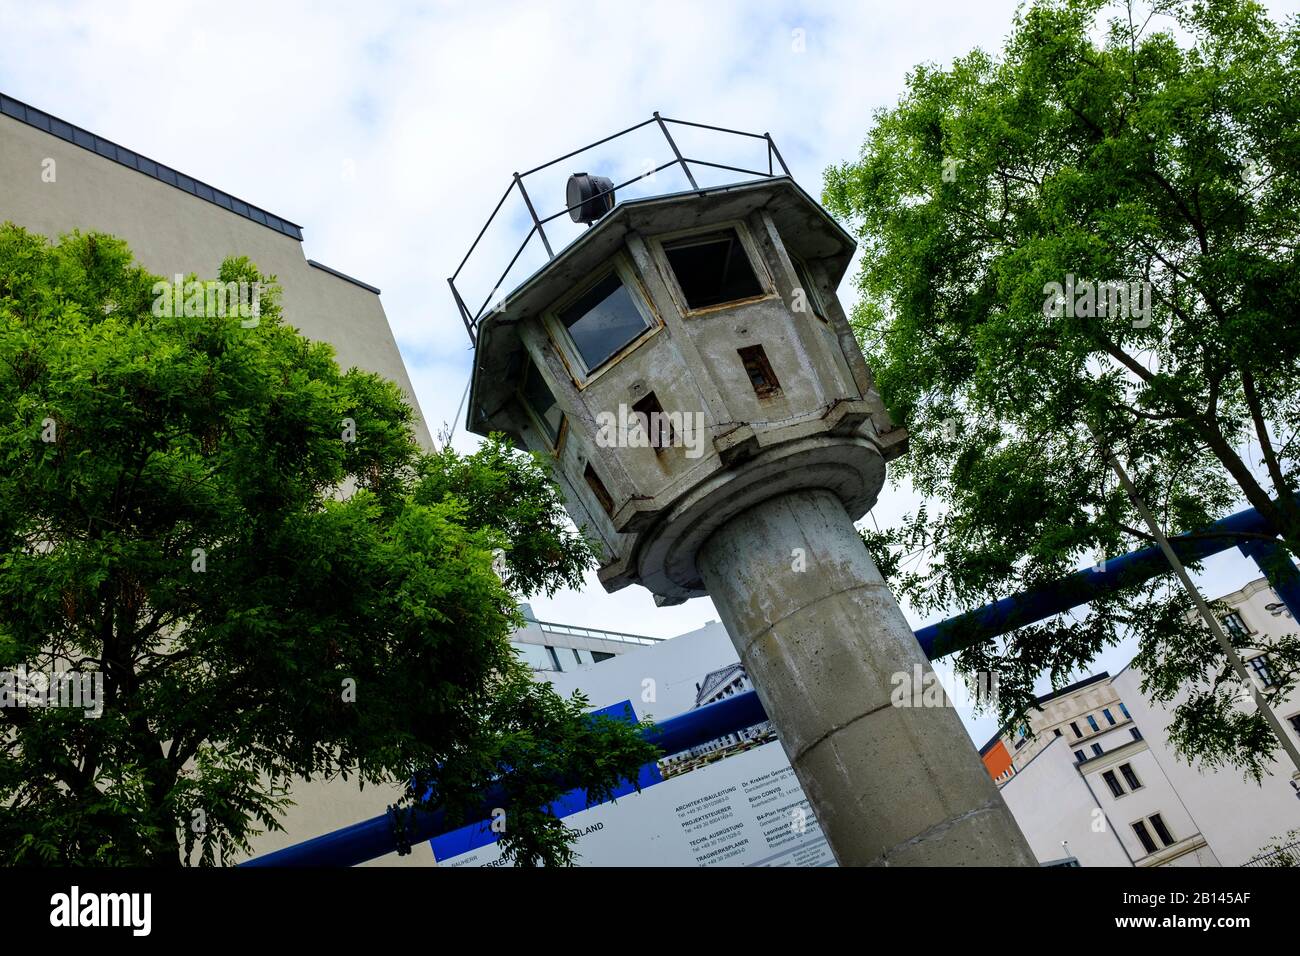 Ehemaliger Grenzwachturm am Potsdamer Platz, Berlin Stockfoto